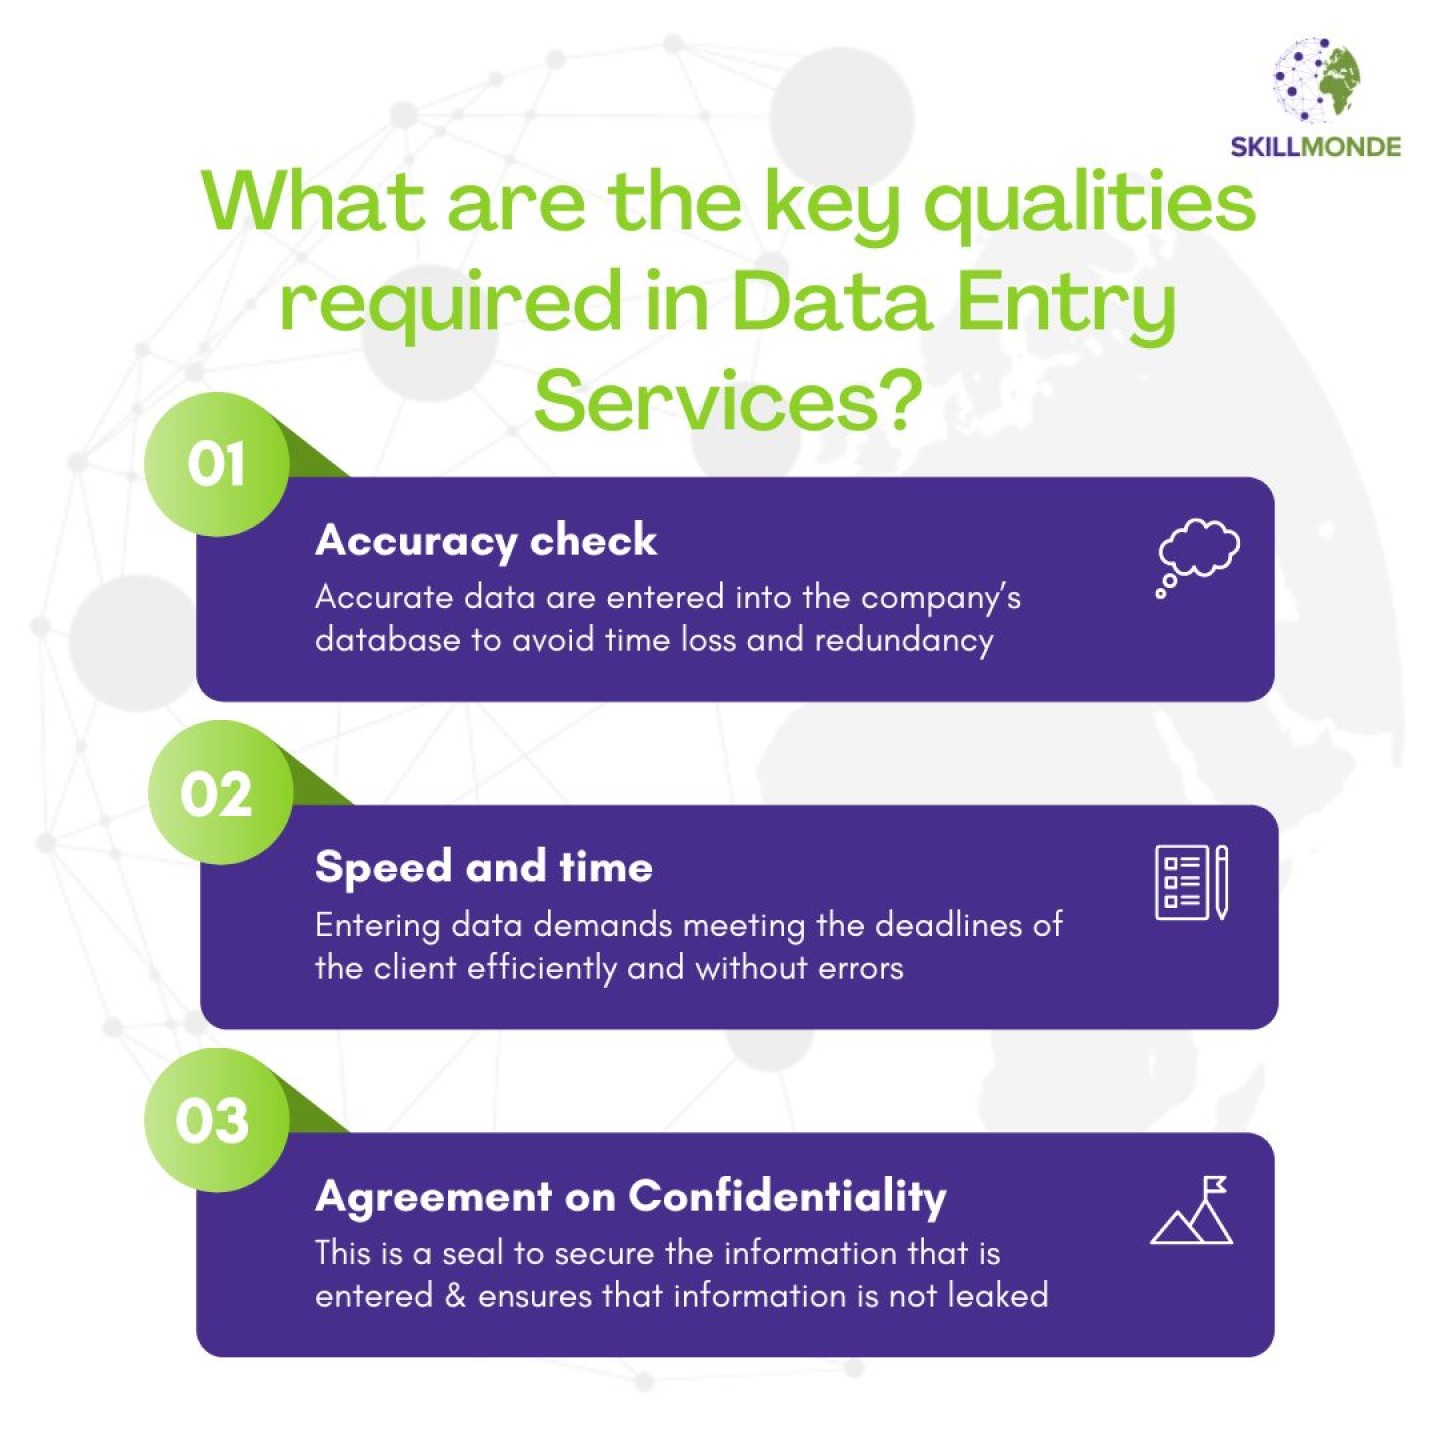 data entry services - skillmonde